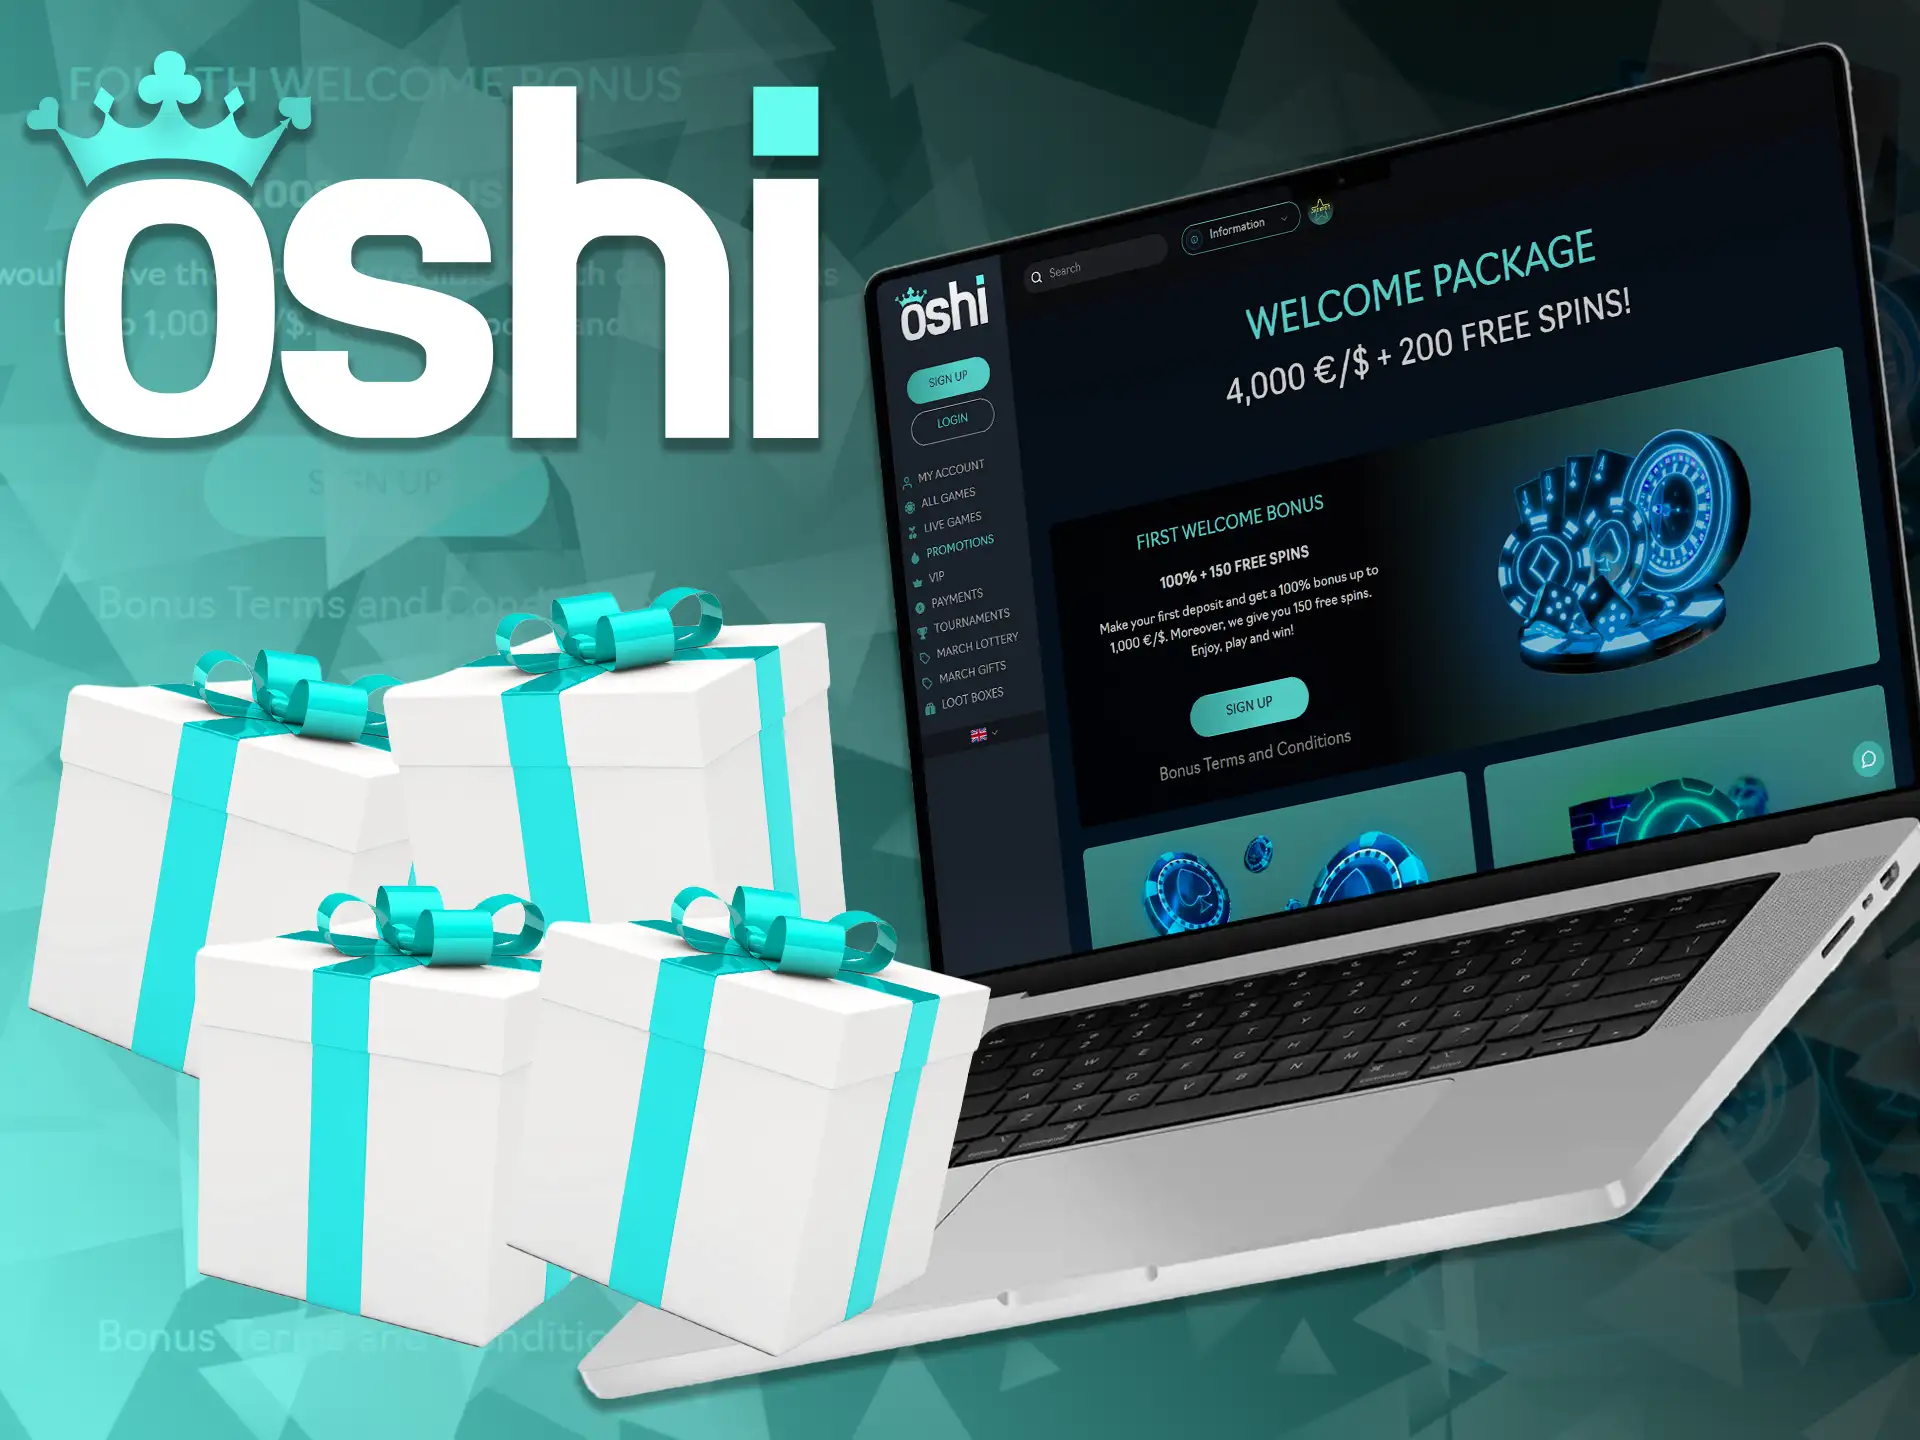 Every new customer of Oshi Online Casino receives a guaranteed bonus.